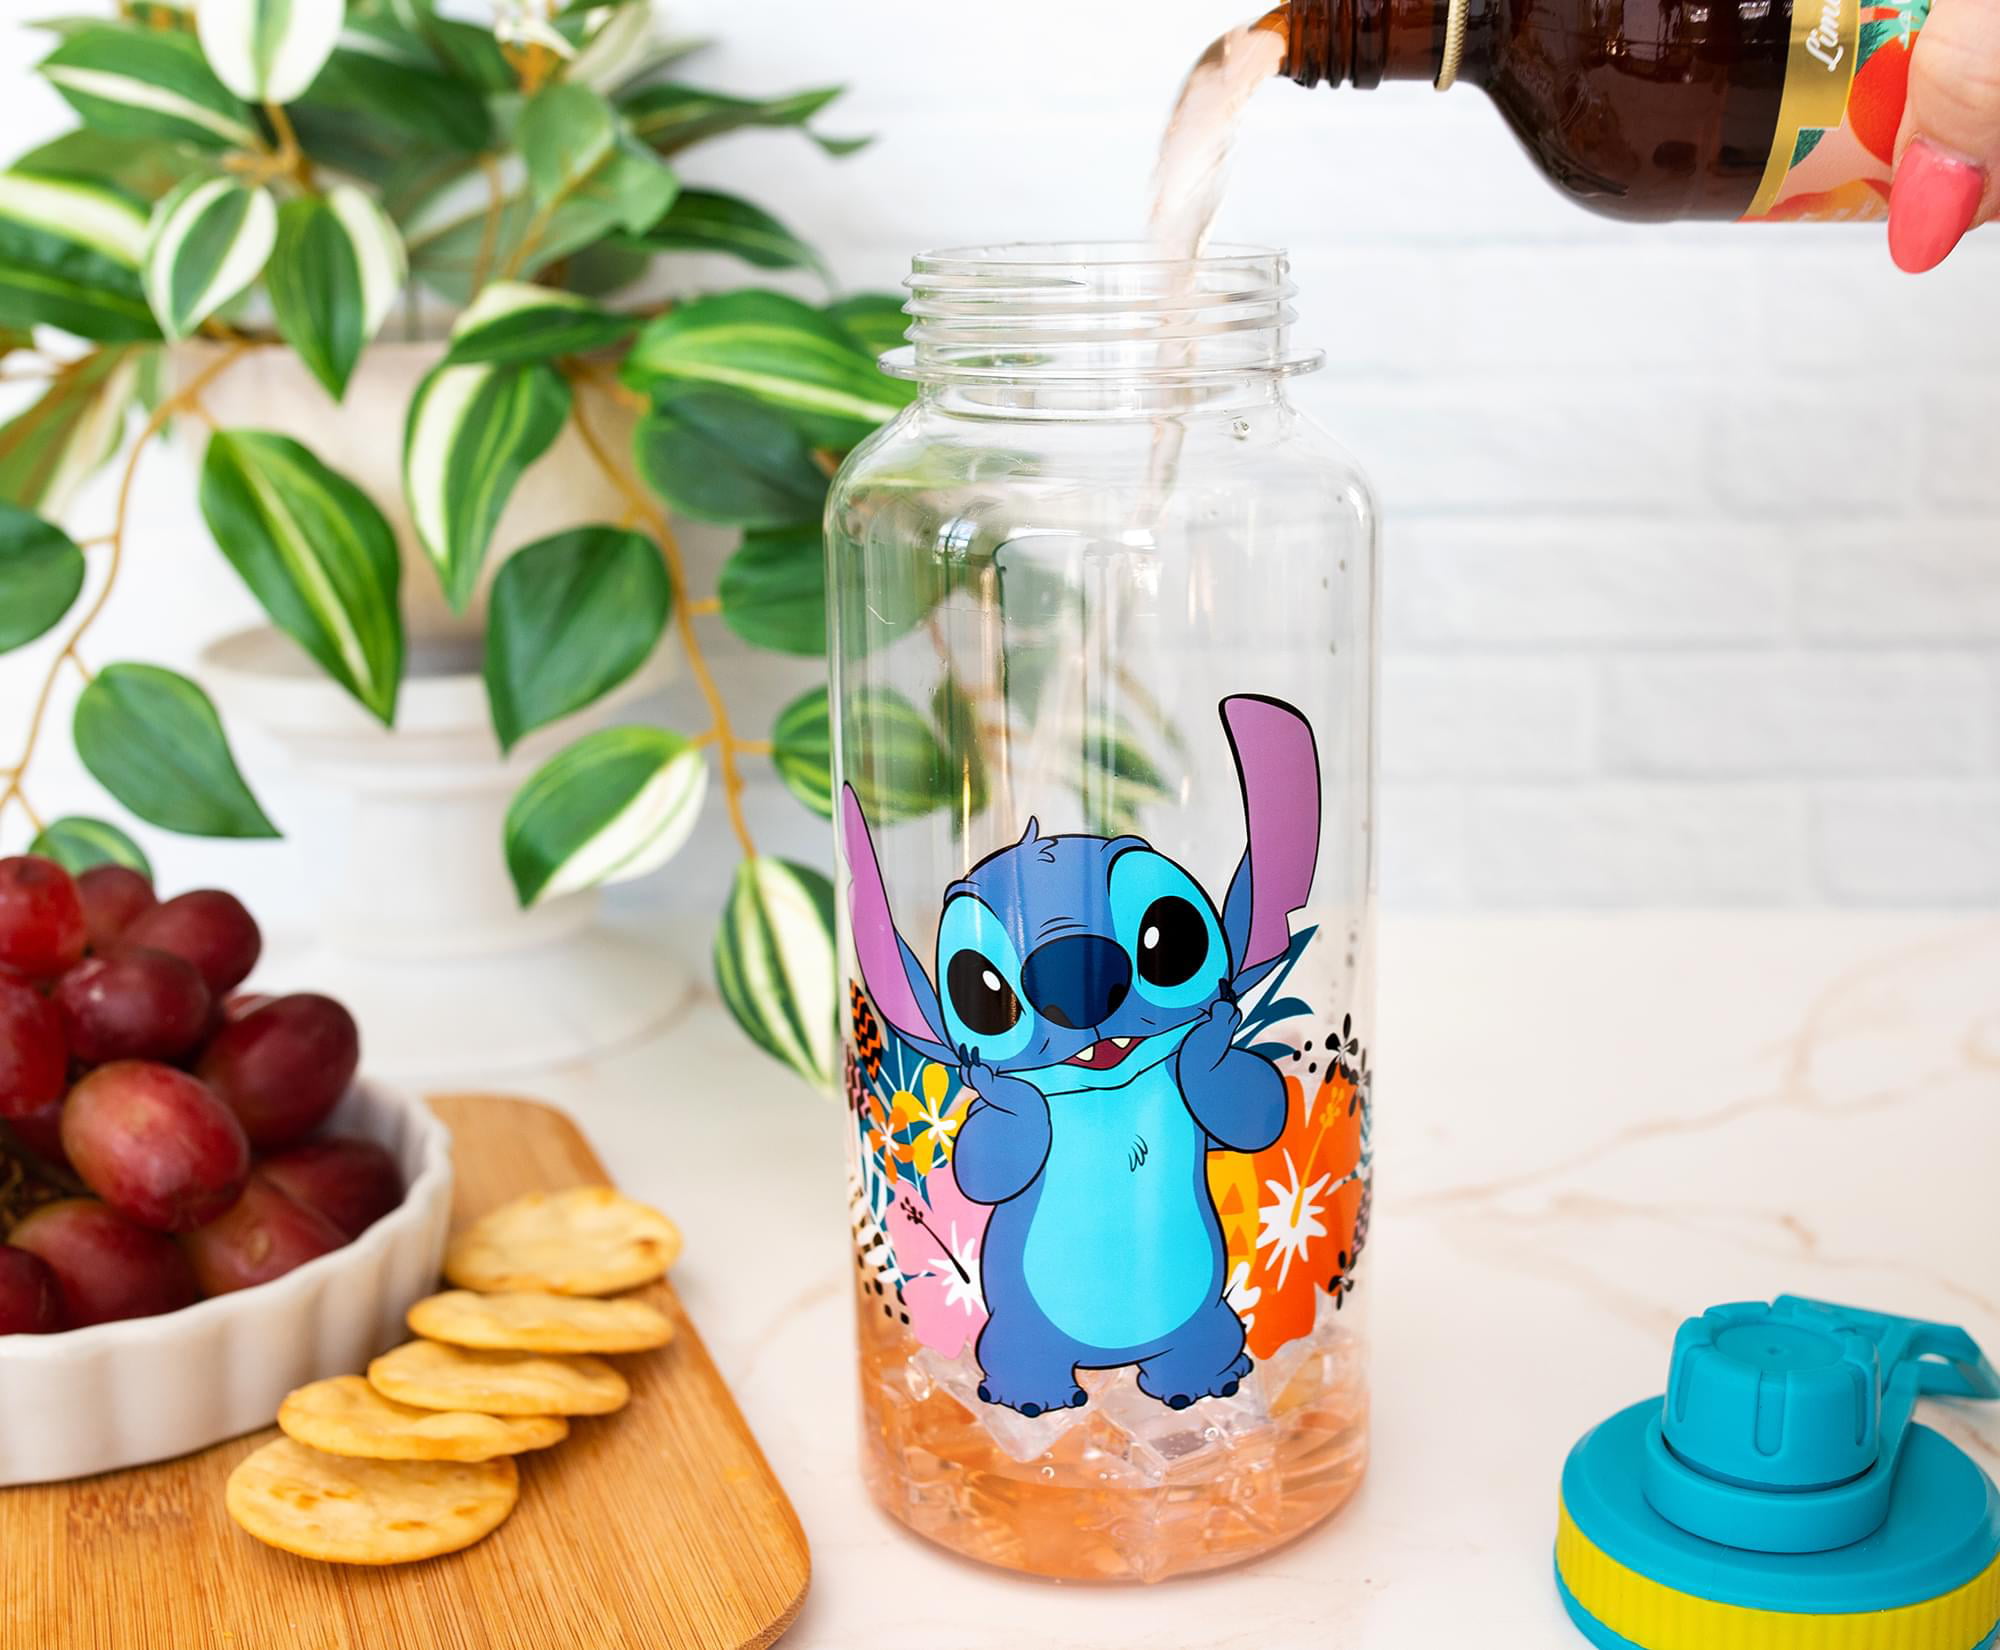 Disney Lilo & Stitch Water Bottle Metal, Spoiled Brat